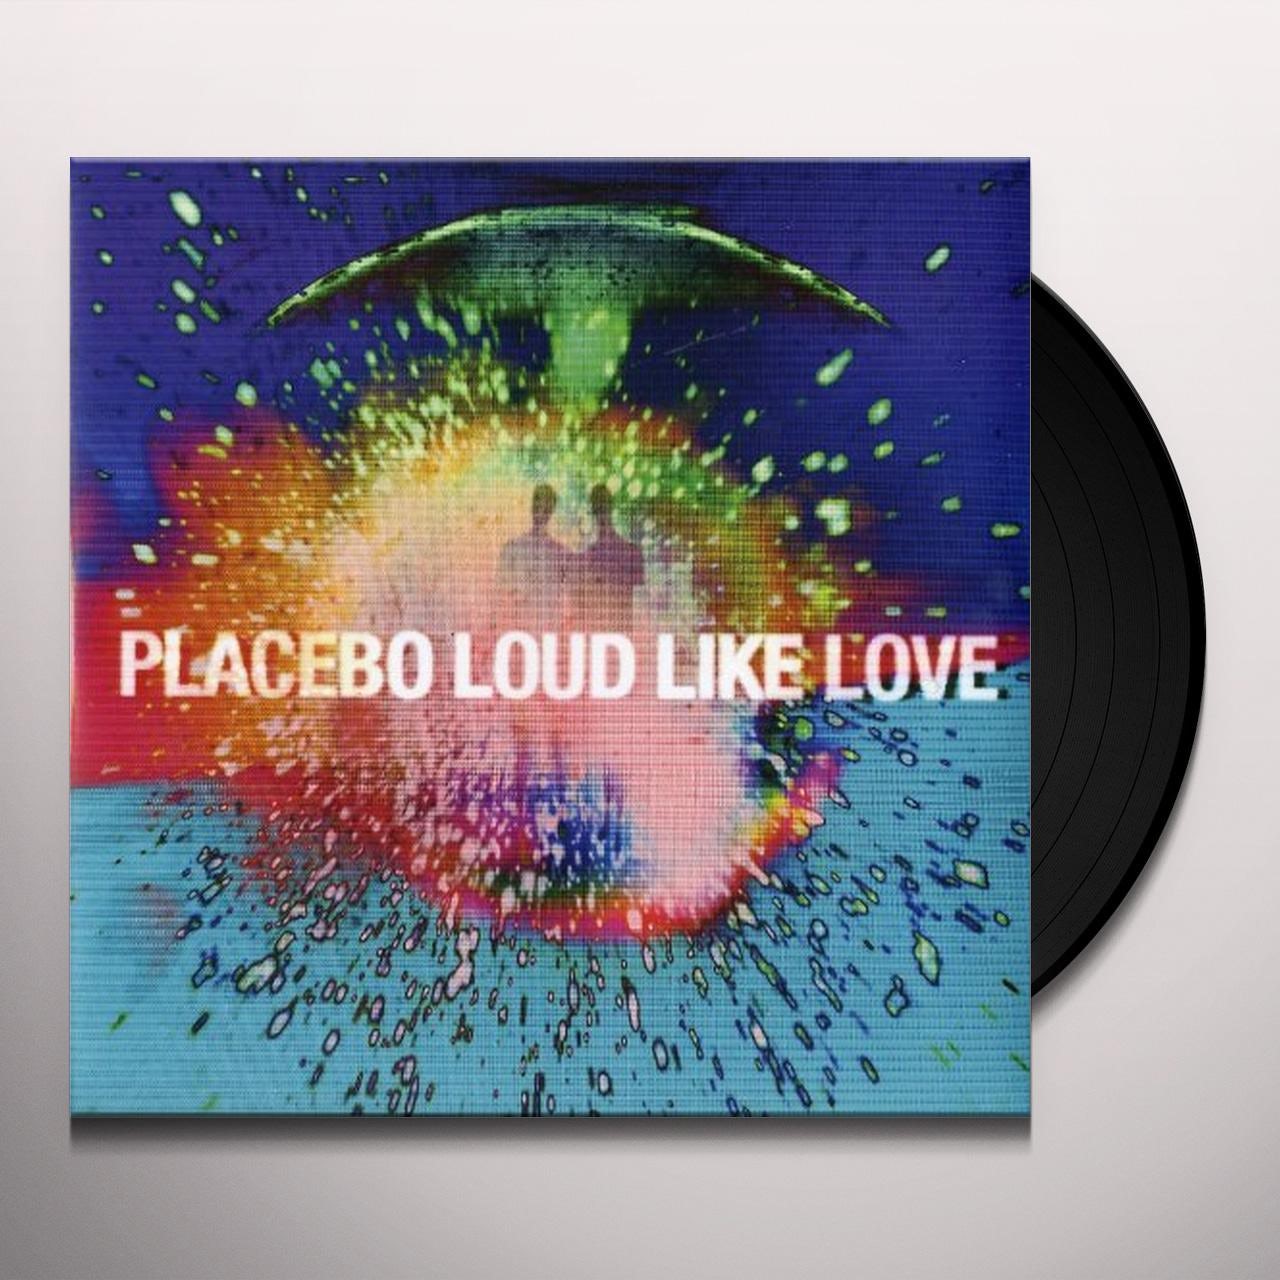 NEW - Placebo, Loud Like Love LP